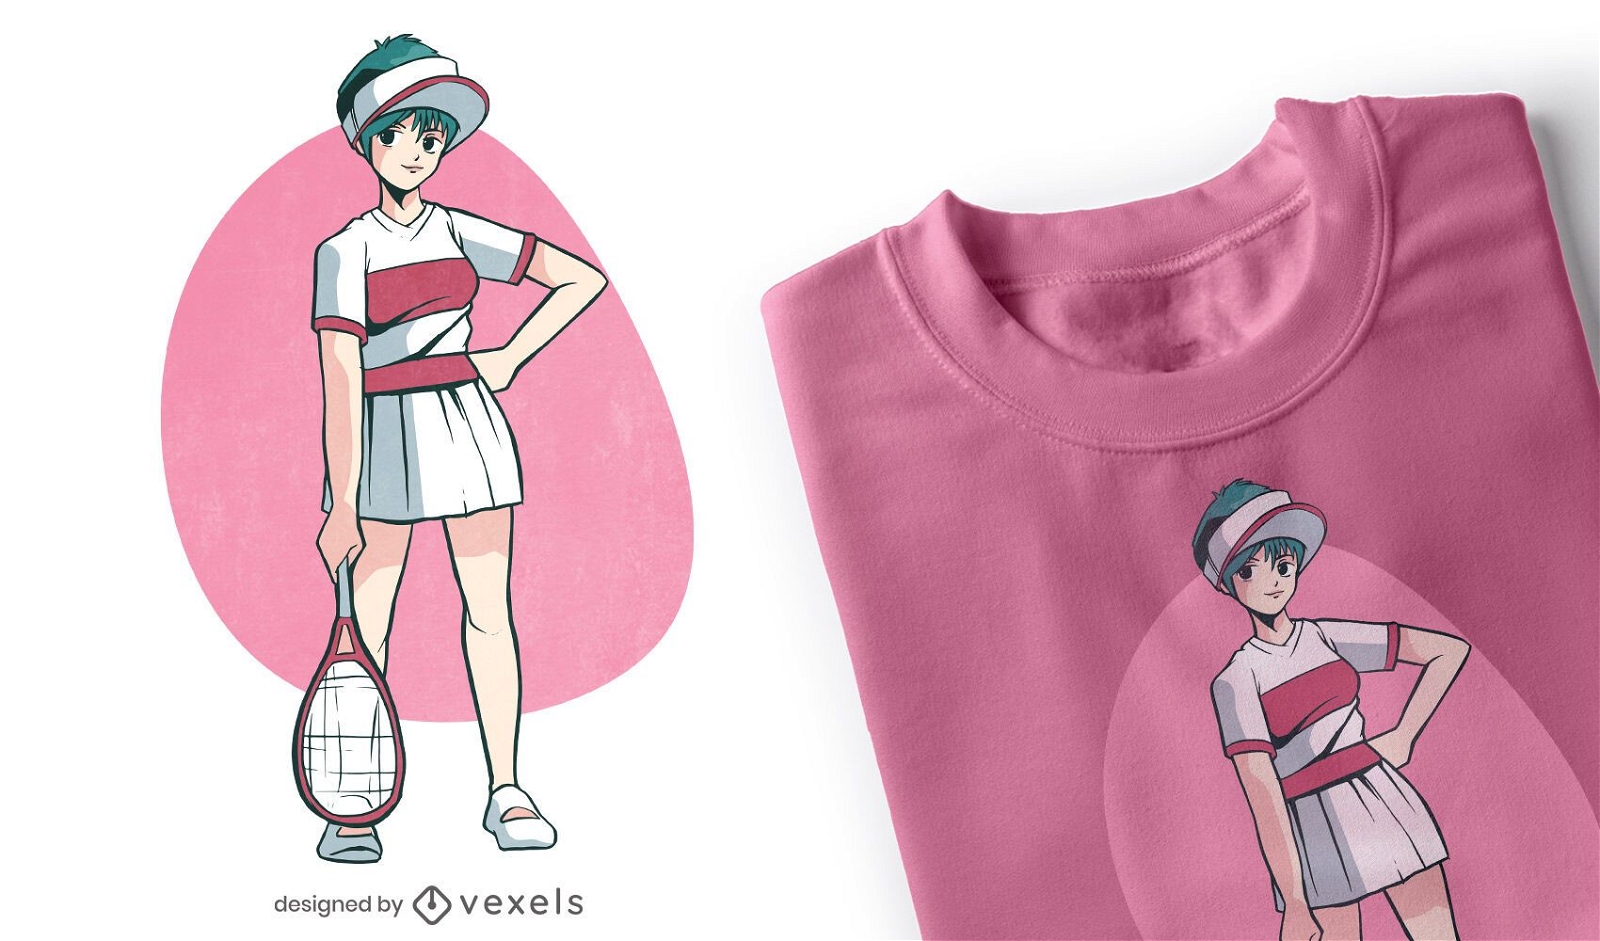 Diseño de camiseta de personaje de anime tennis girl.